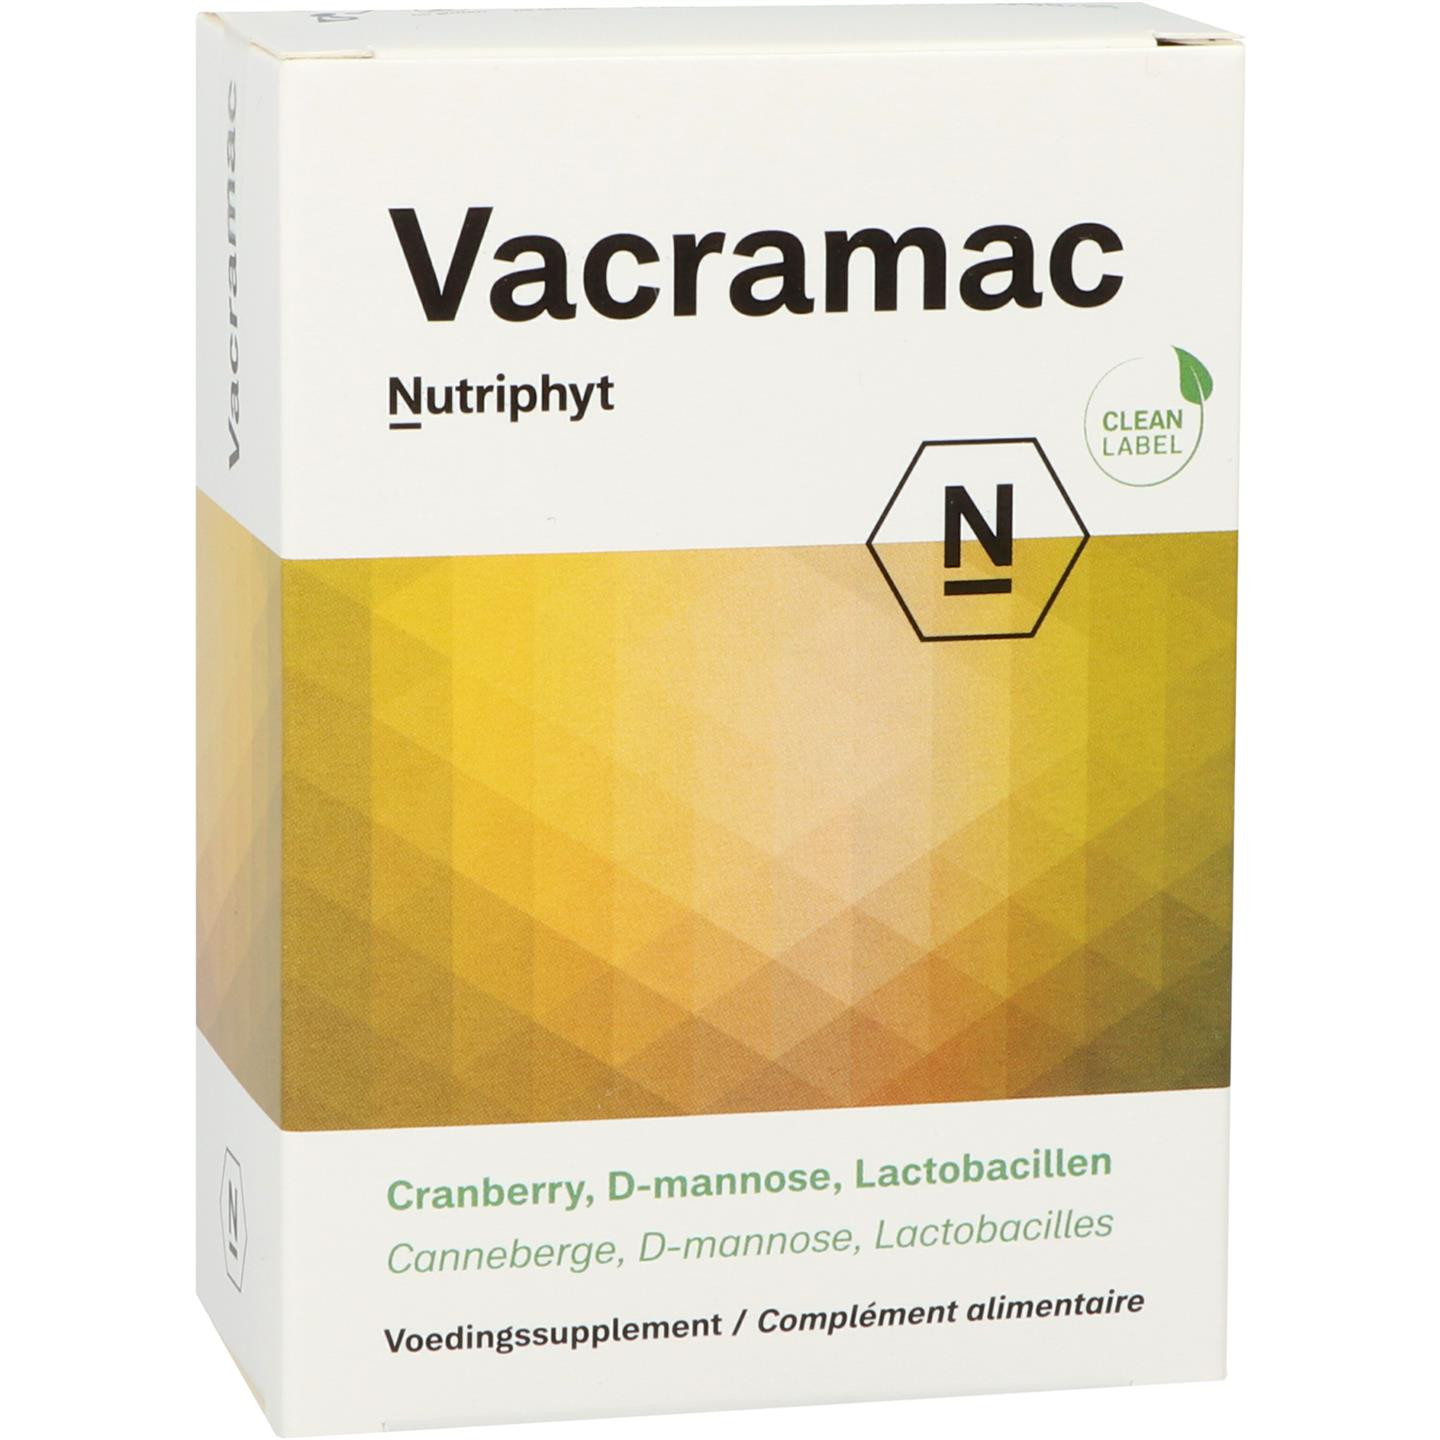 Vacramac